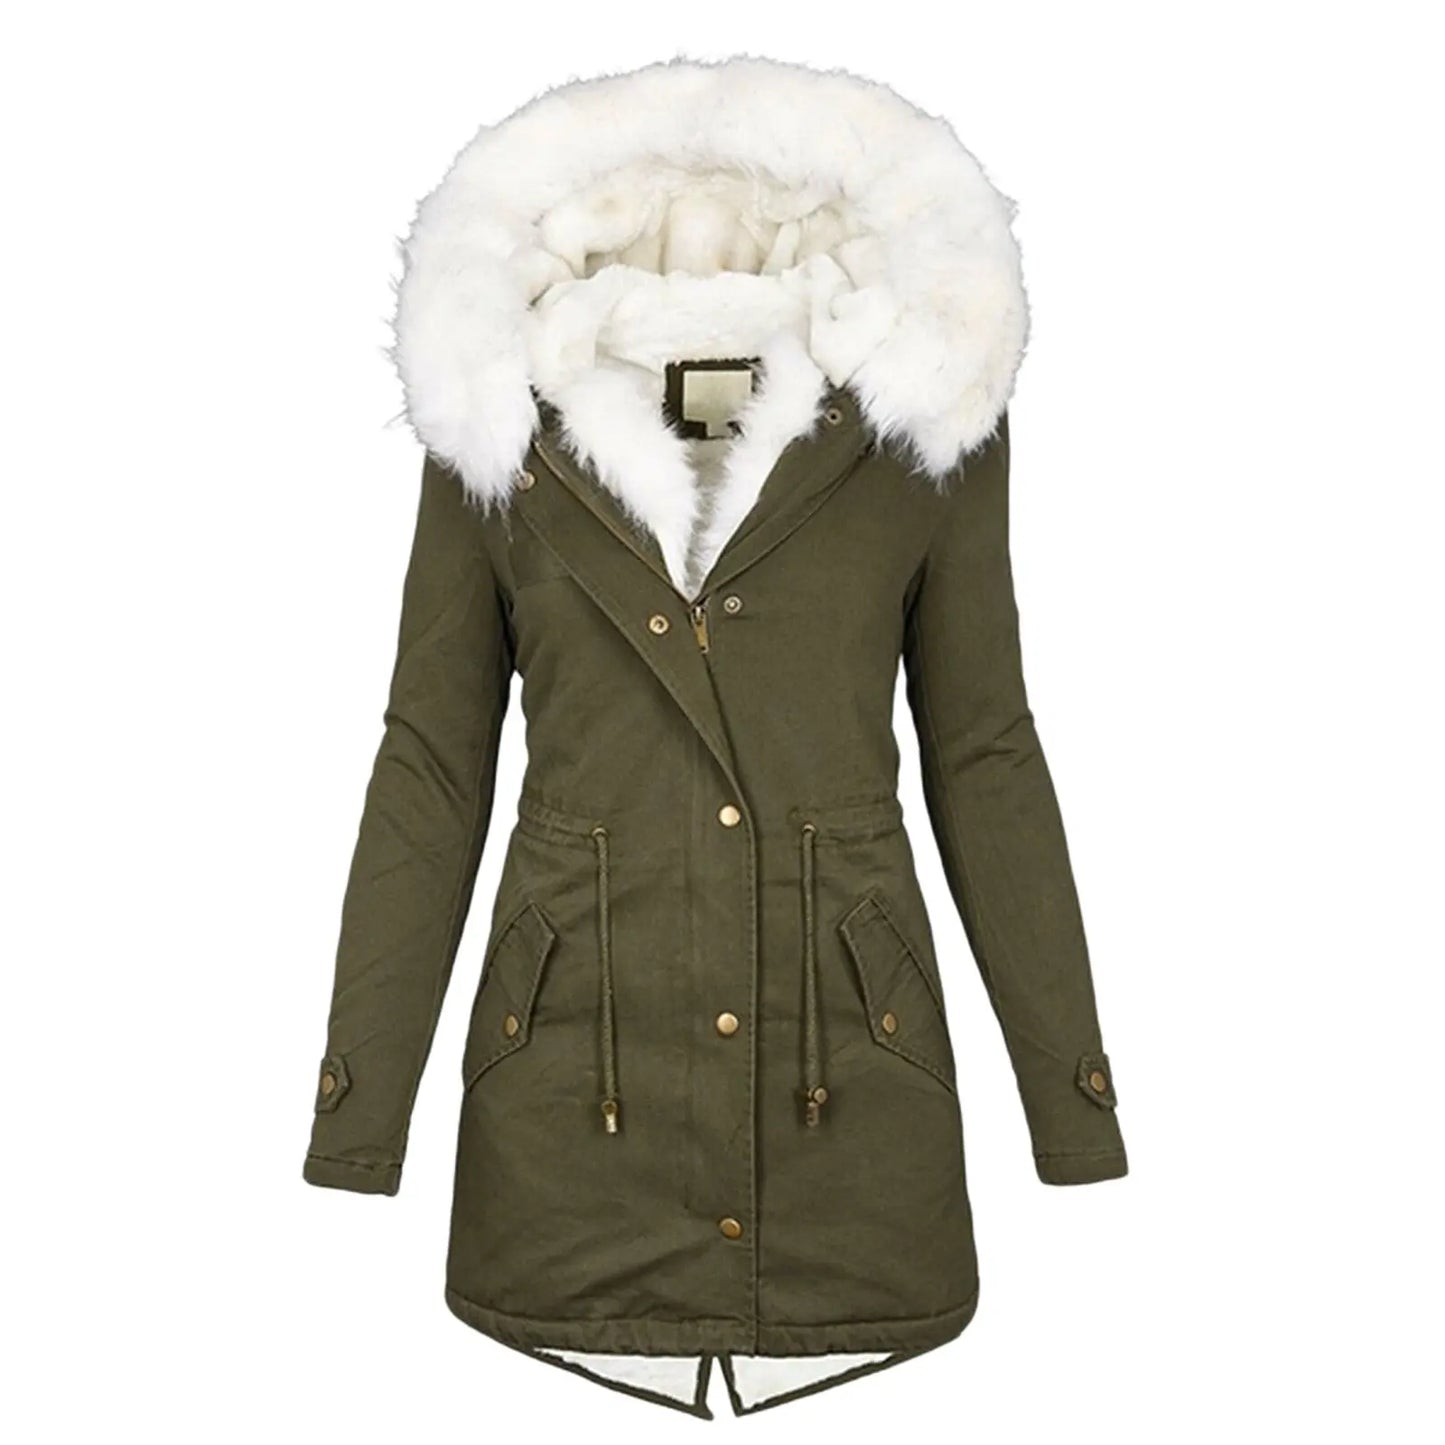 Neue Winter Damen Jacke mittellang verdicken Plus Size 5XL Outwear Kapuze Wattemantel schlanke Parka Baumwolle gepolsterte Jacke Mantel.